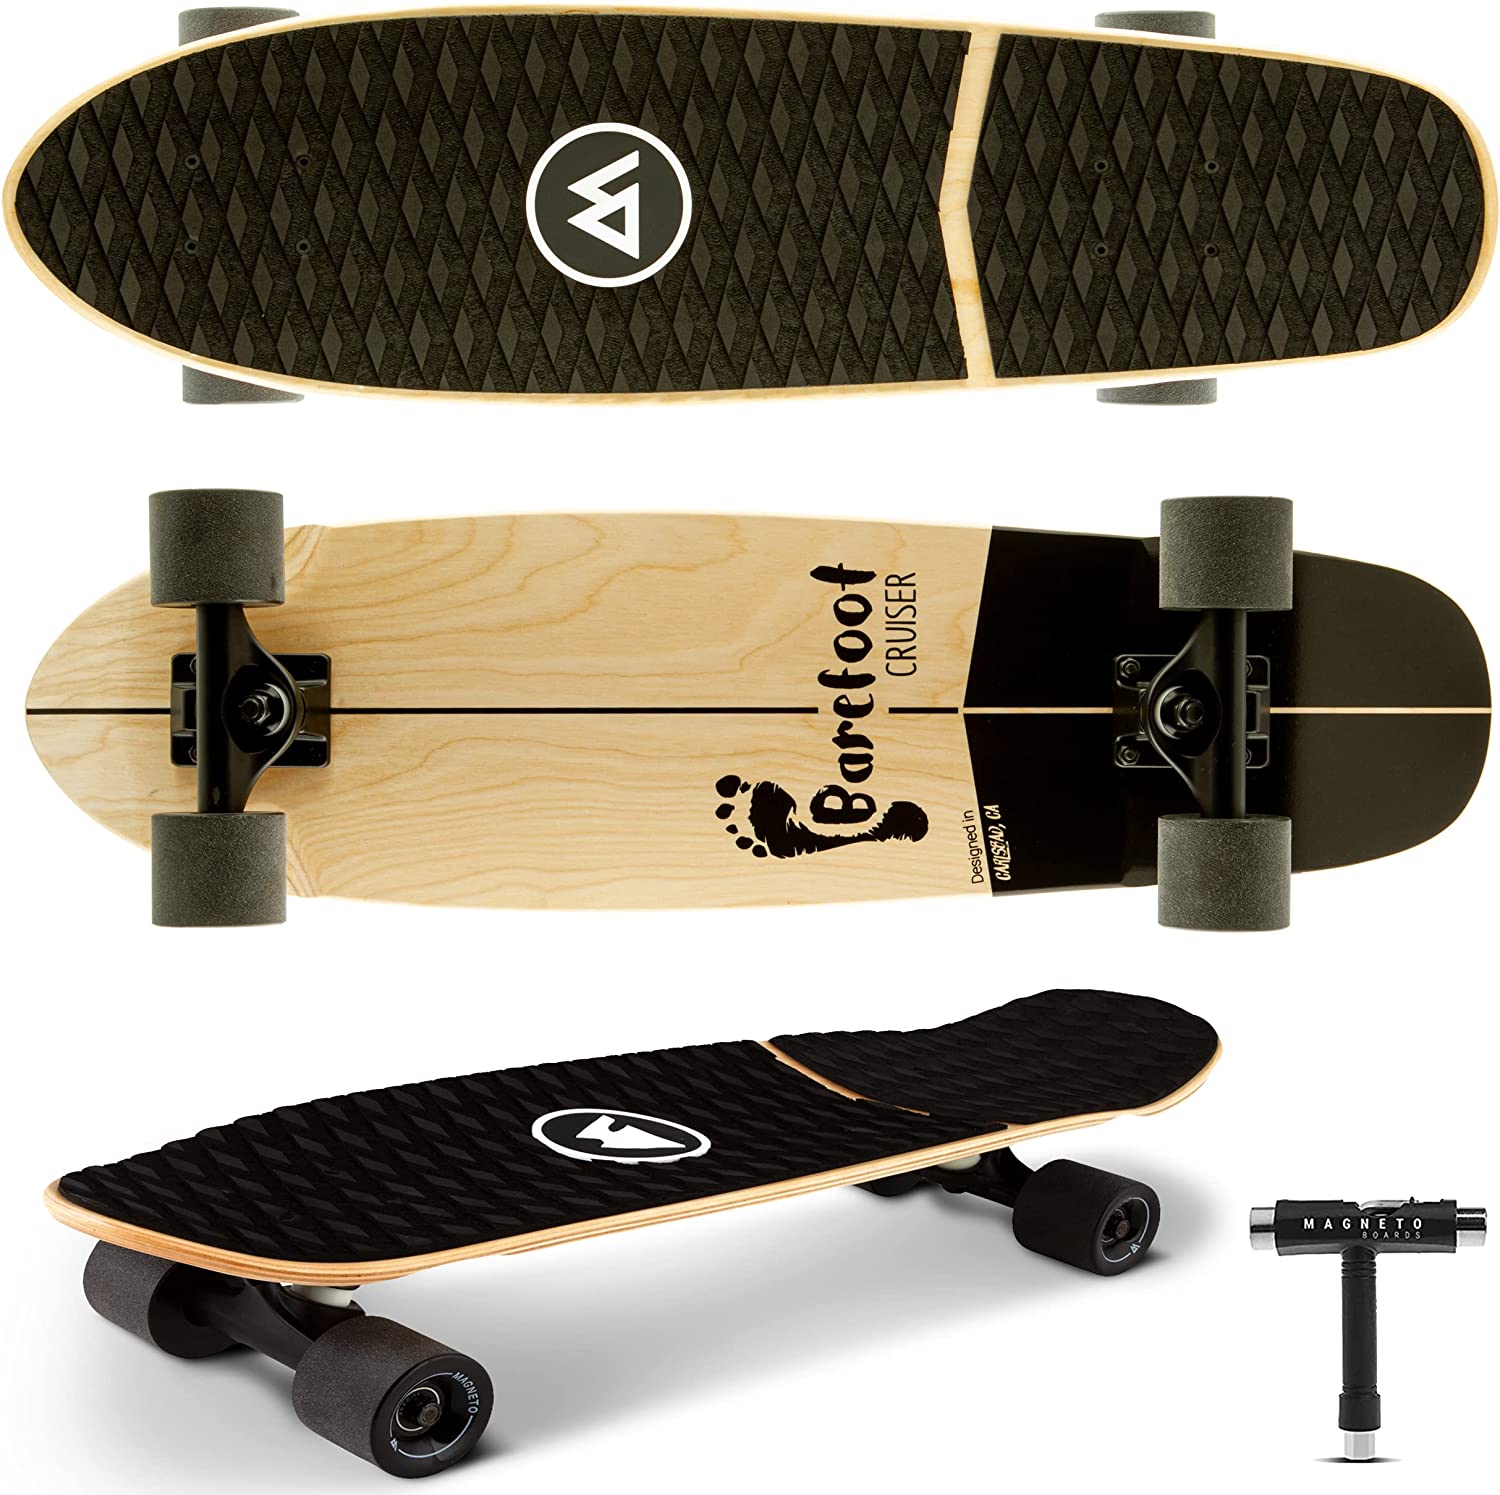 Mini Skateboard 27.5" 7.5" Short Board for Kids, Teens and Adults Eco Trade Company